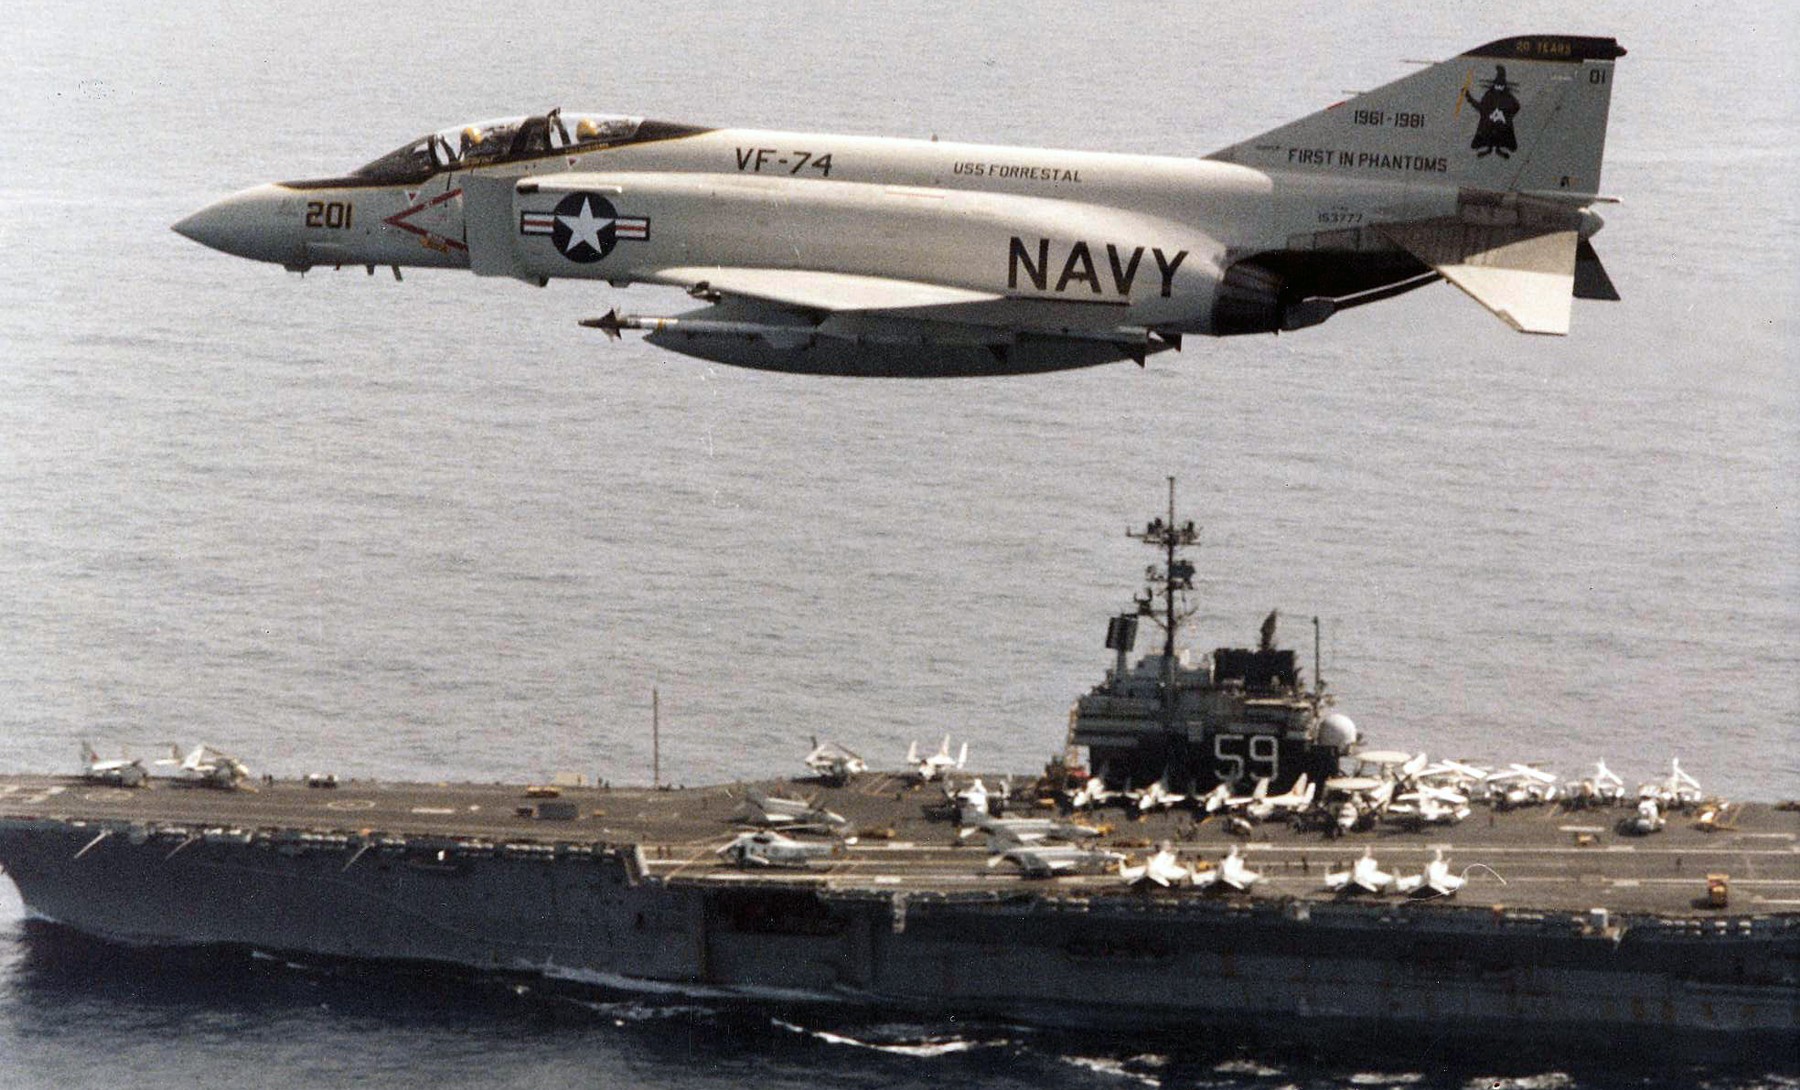 cv-59 uss forrestal aircraft carrier air wing cvw-17 us navy f-4 phantom vf-74 19